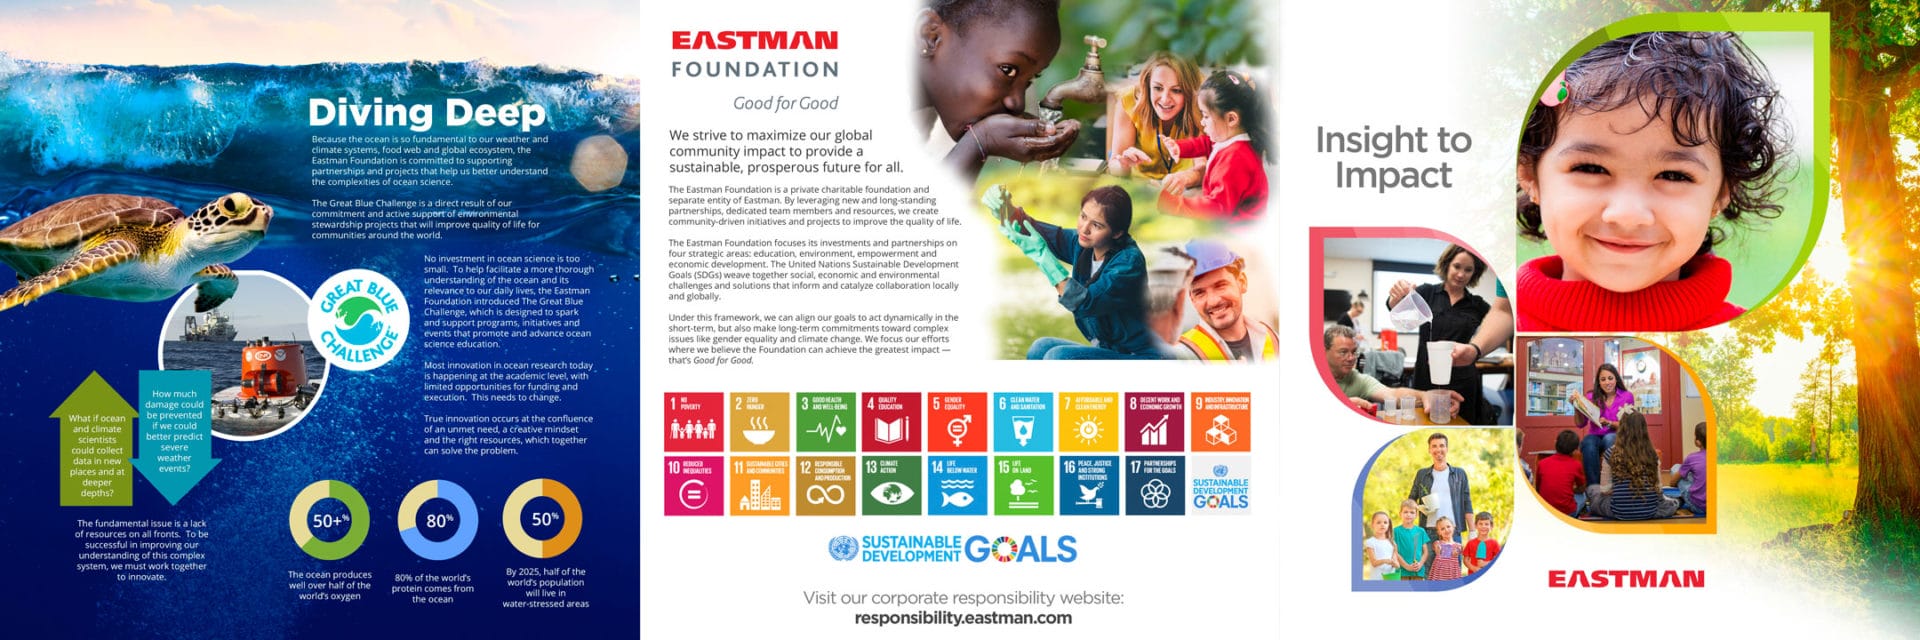 Eastman Insight to impact brochure - outside